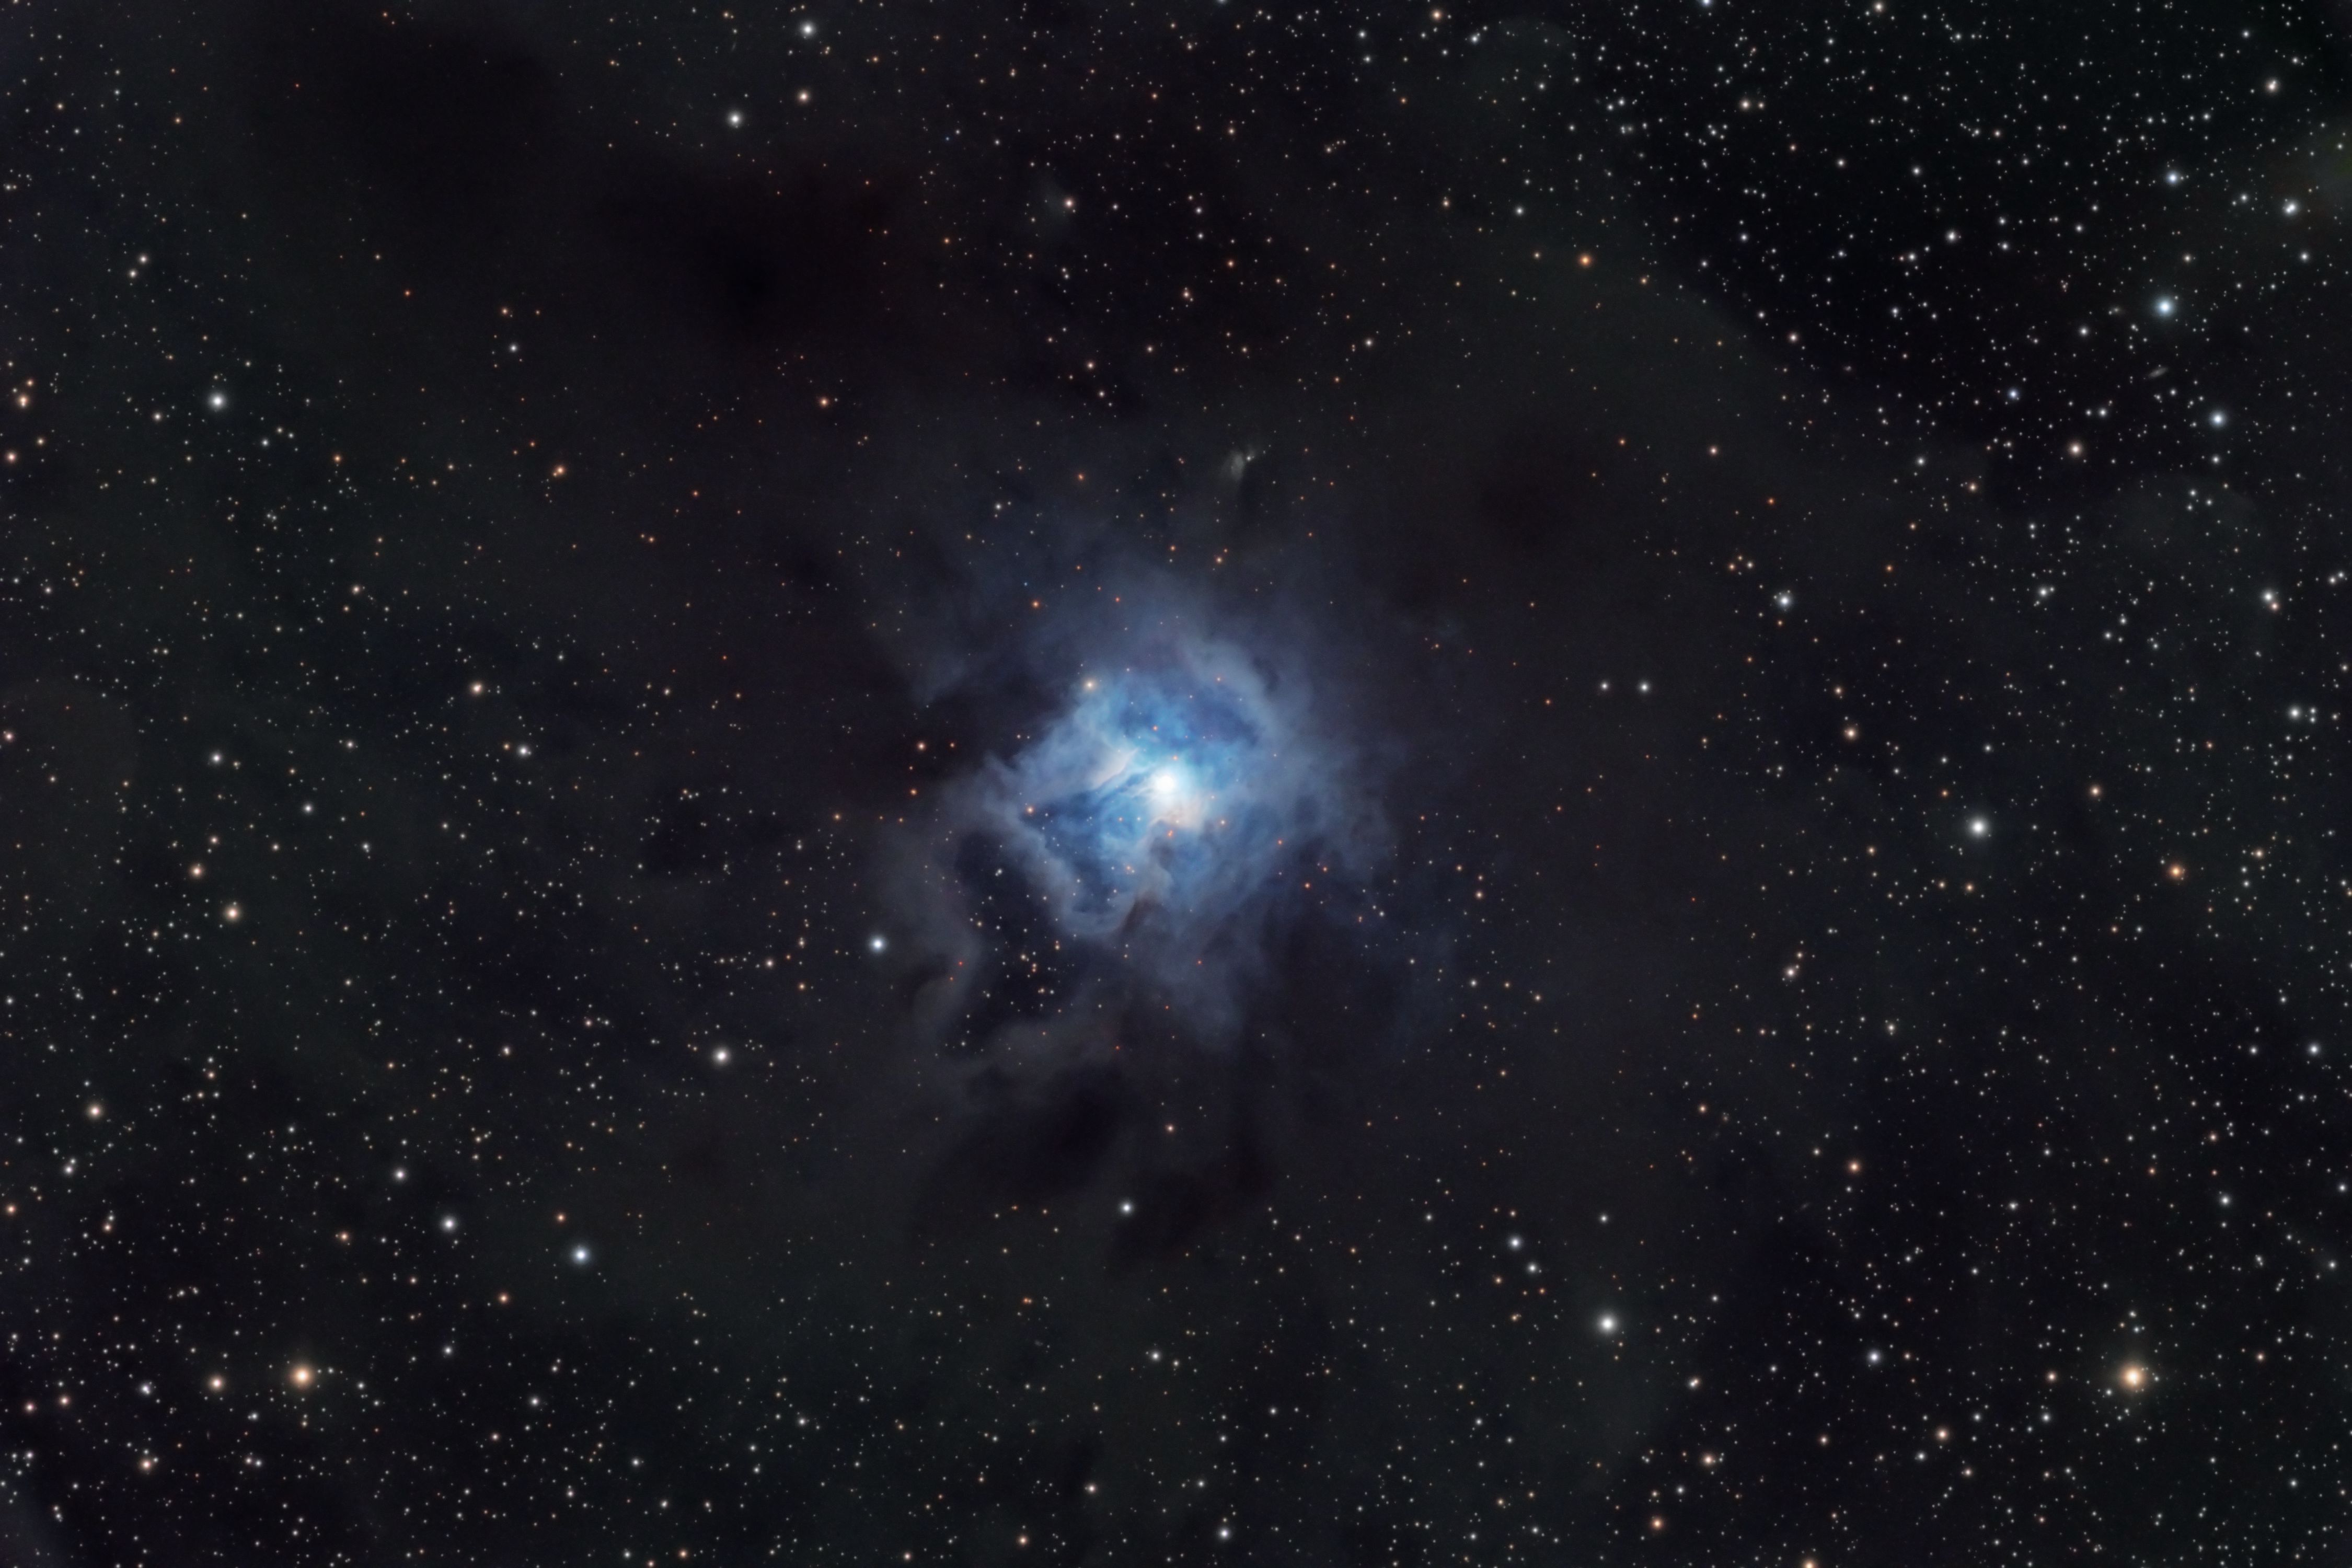 NGC7023.jpg